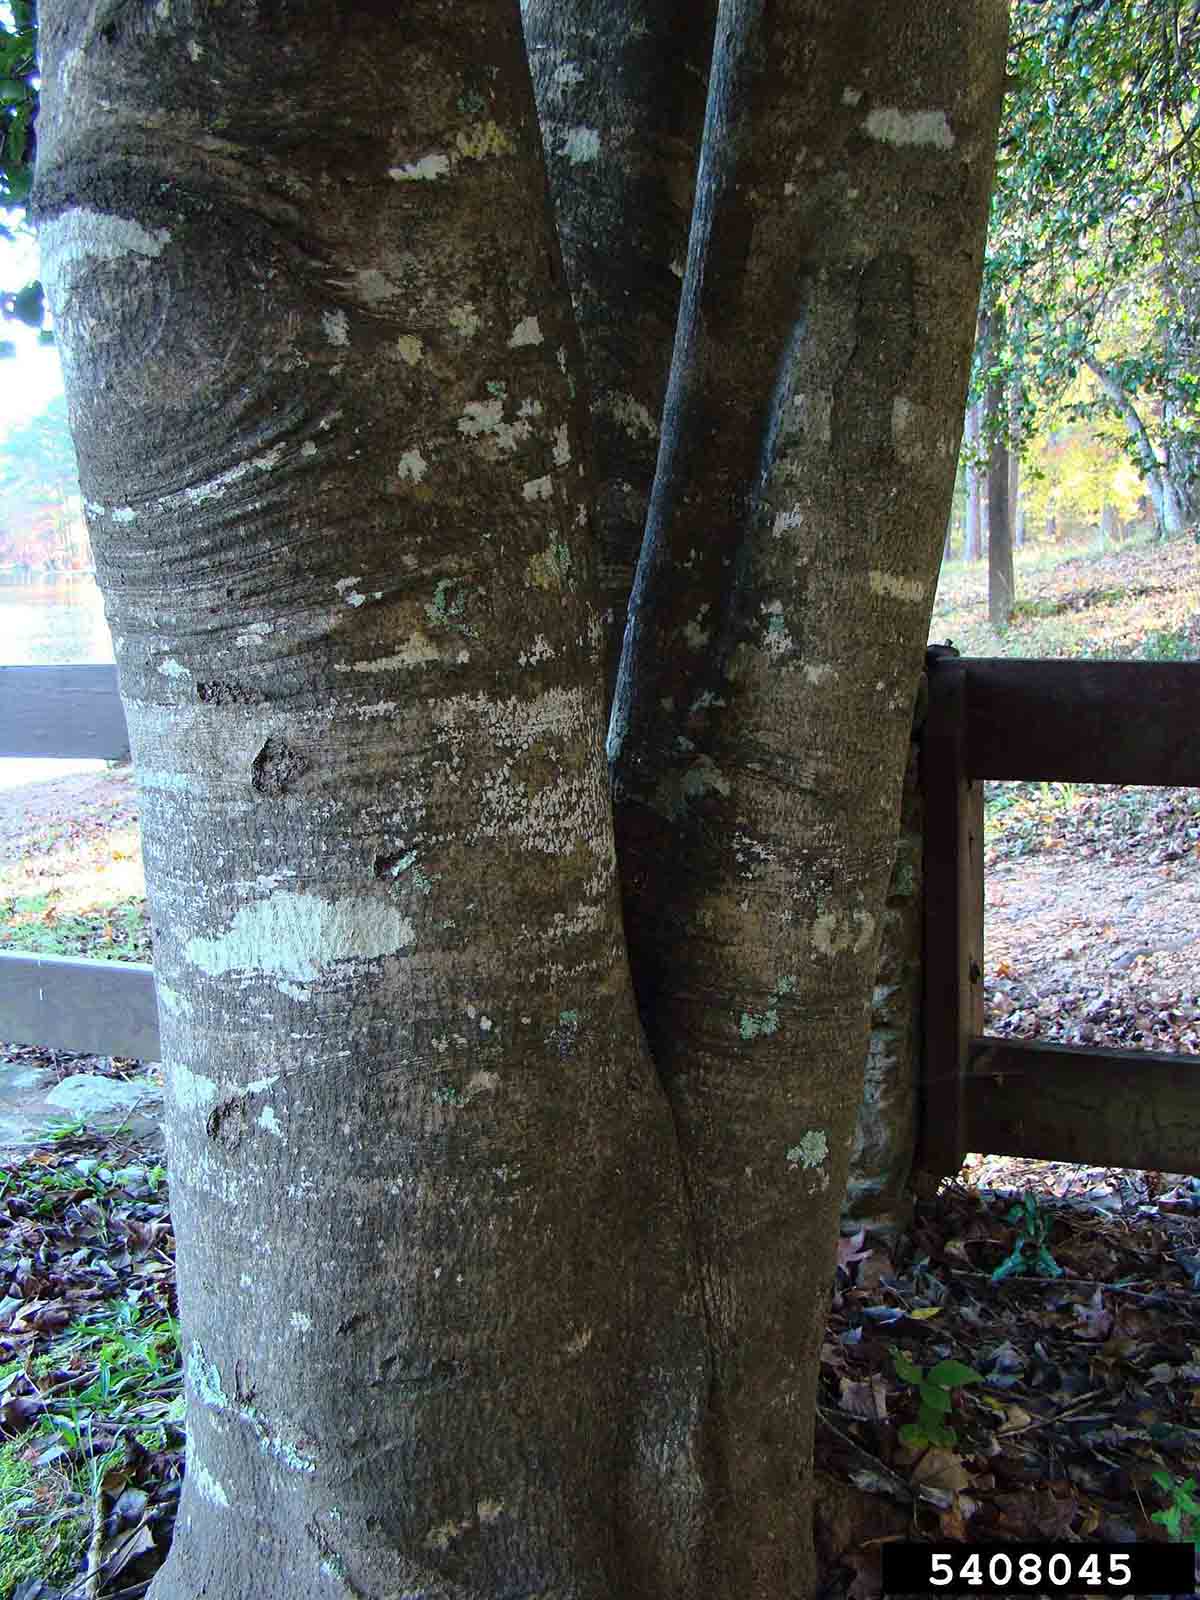 American holly bark on trunk